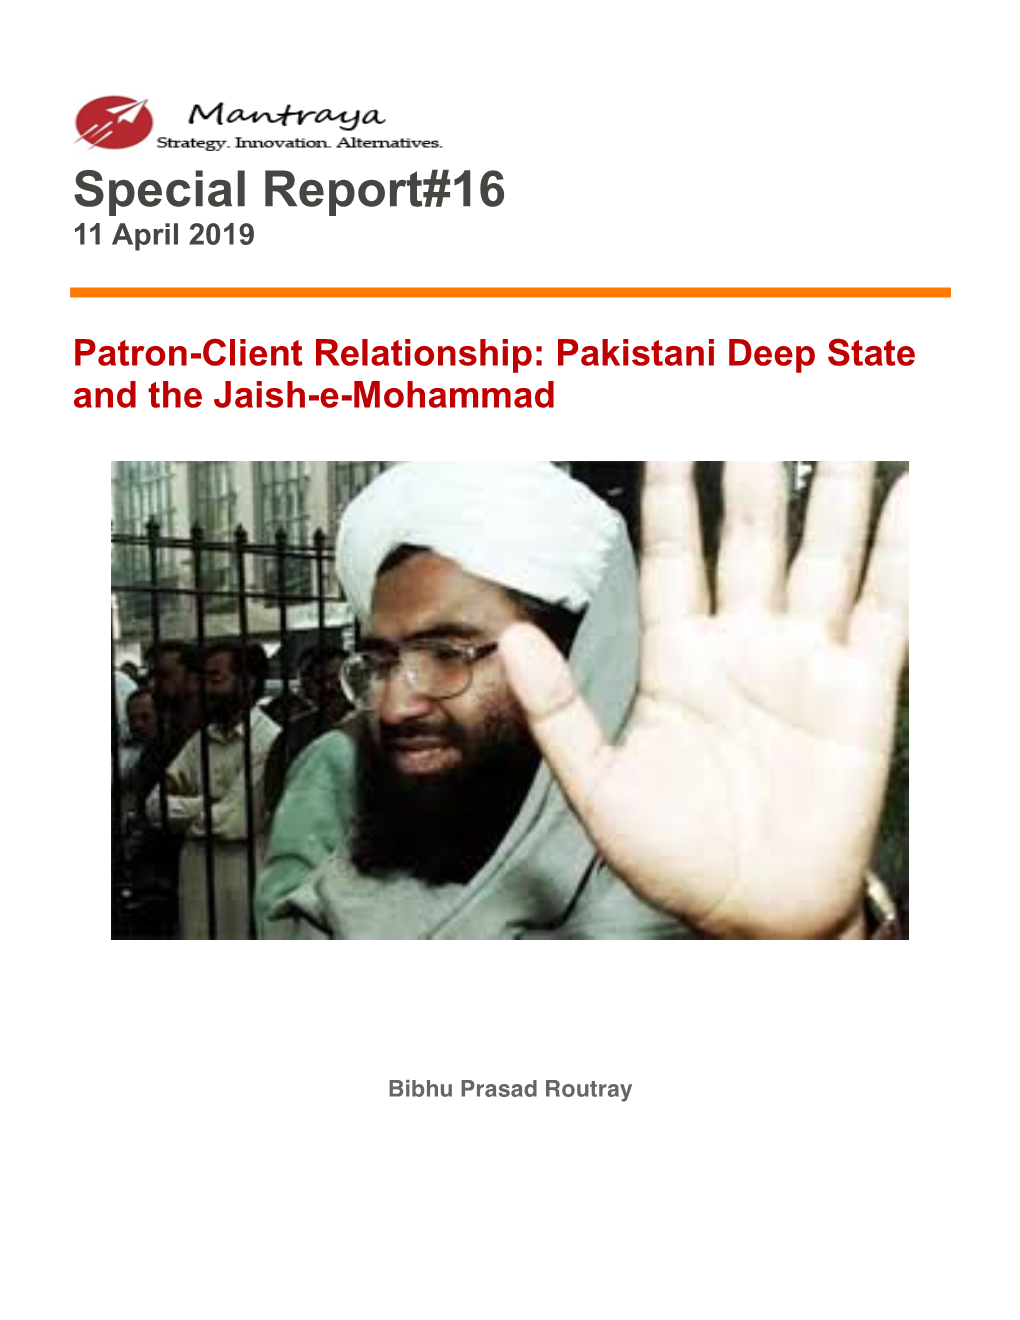 Patron Client Relationship: Pakistani Deep State & the Jaish